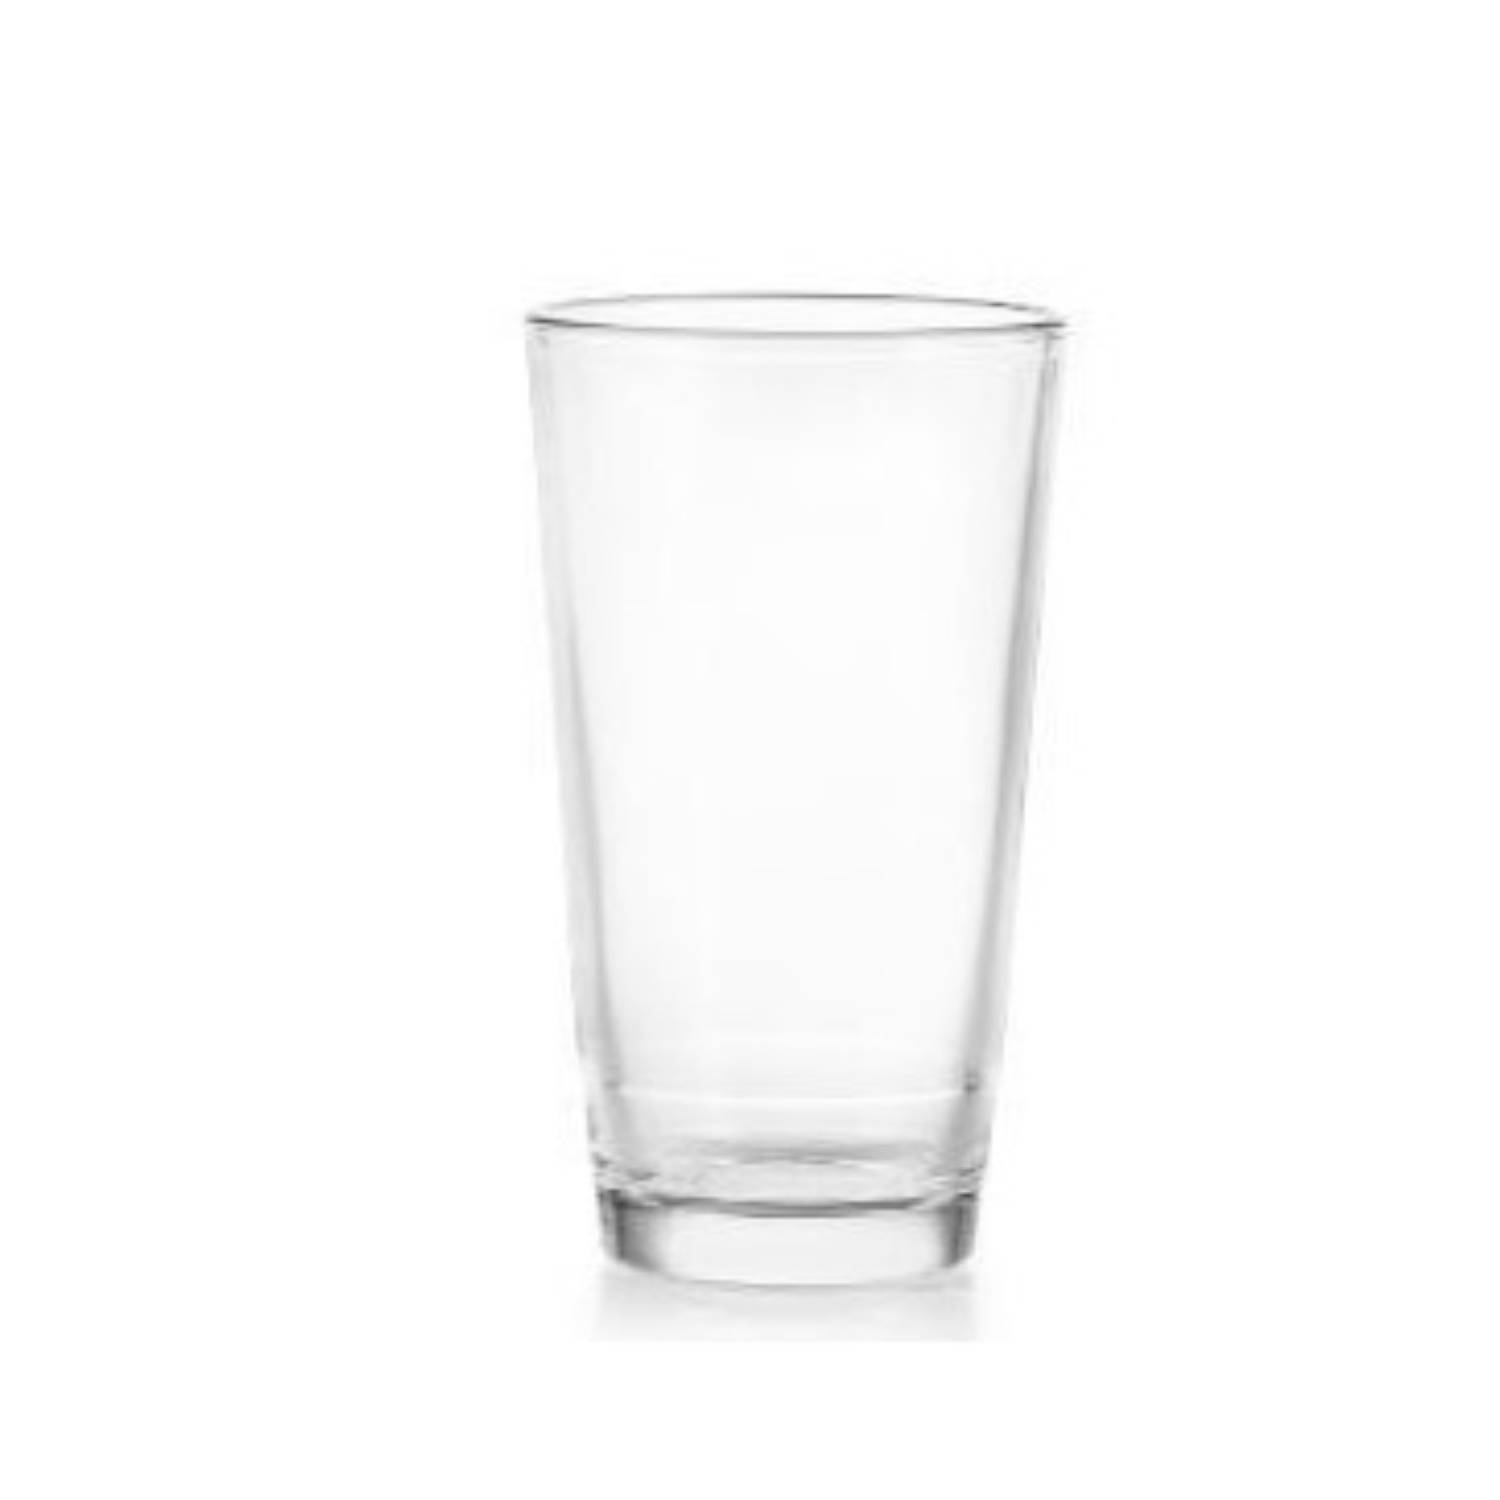 Set de 6 vasos de cristal 295 ml, modelo París, juego de vasos